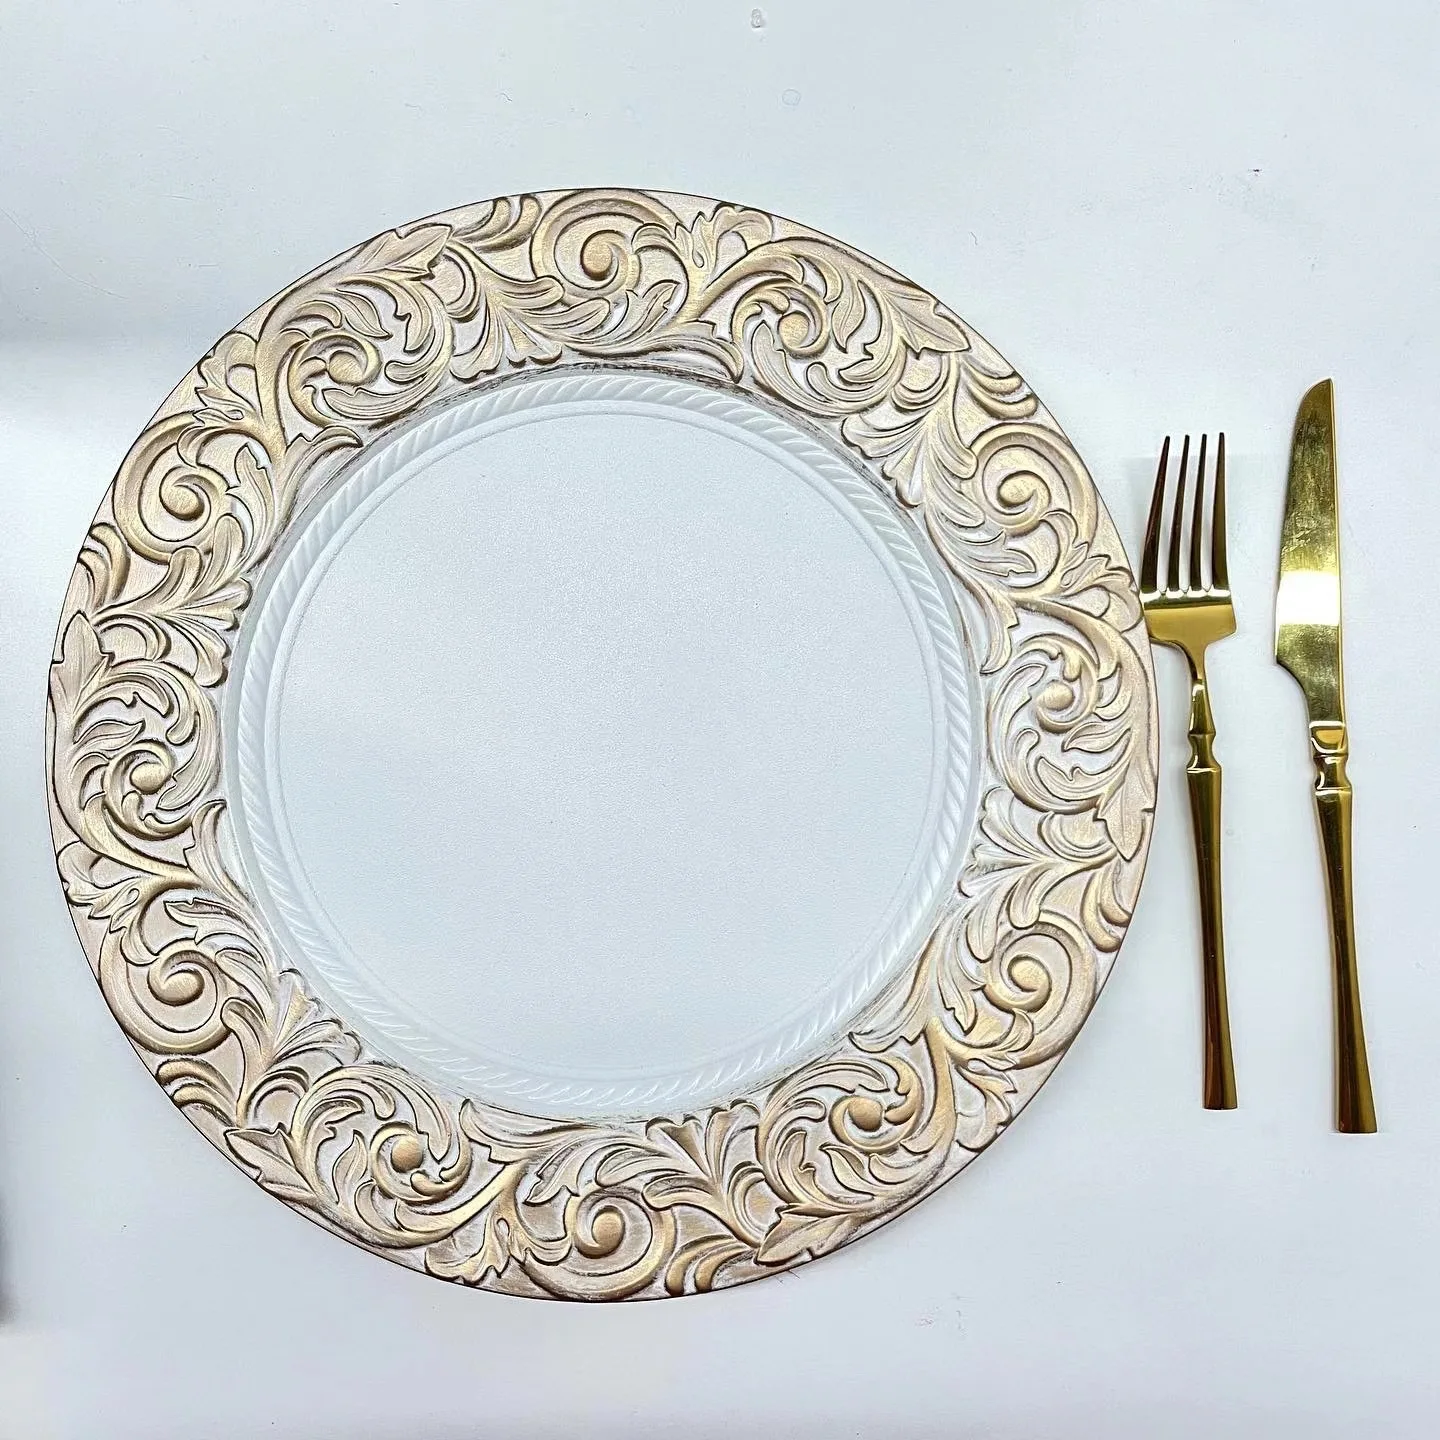 

8Pieces/Set Diameter 33cm Gold/Silver Plastic Plates Mats Insulation Dishes Heat Resistant Mat Wedding /Hotel Table Decor GRP06